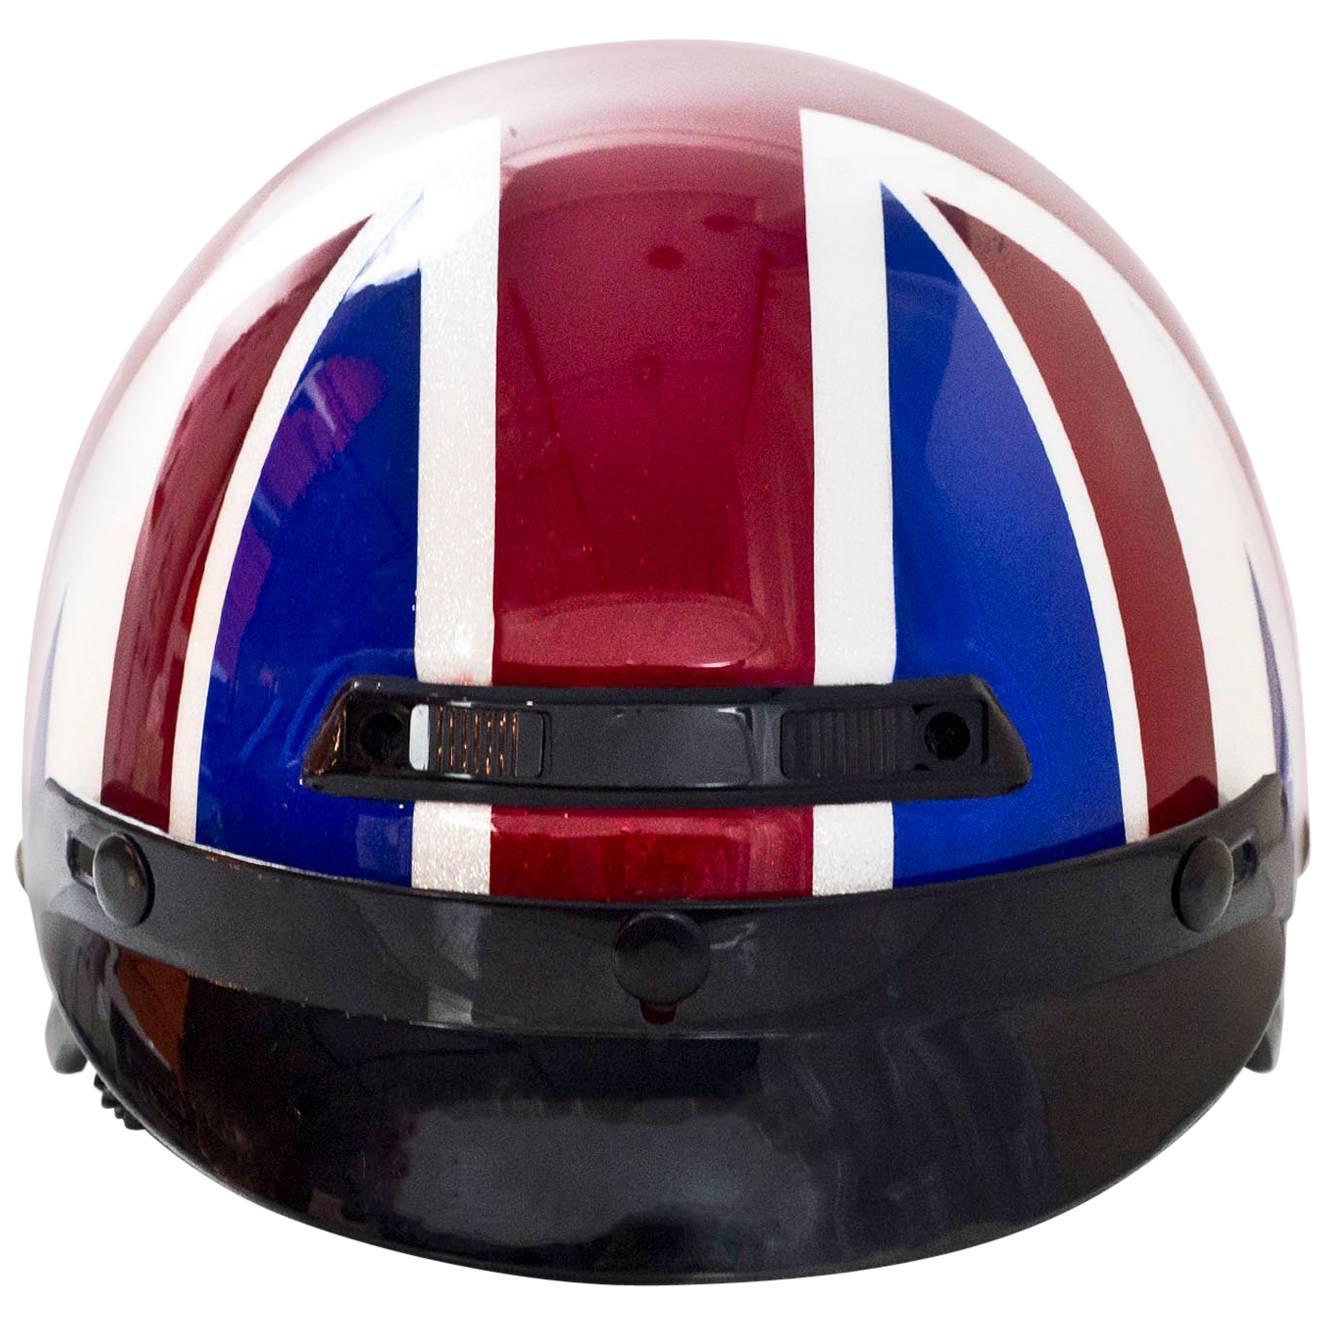 Marc Jacobs Red White and Blue Union Jack British Flag Riding Helmet Sz M